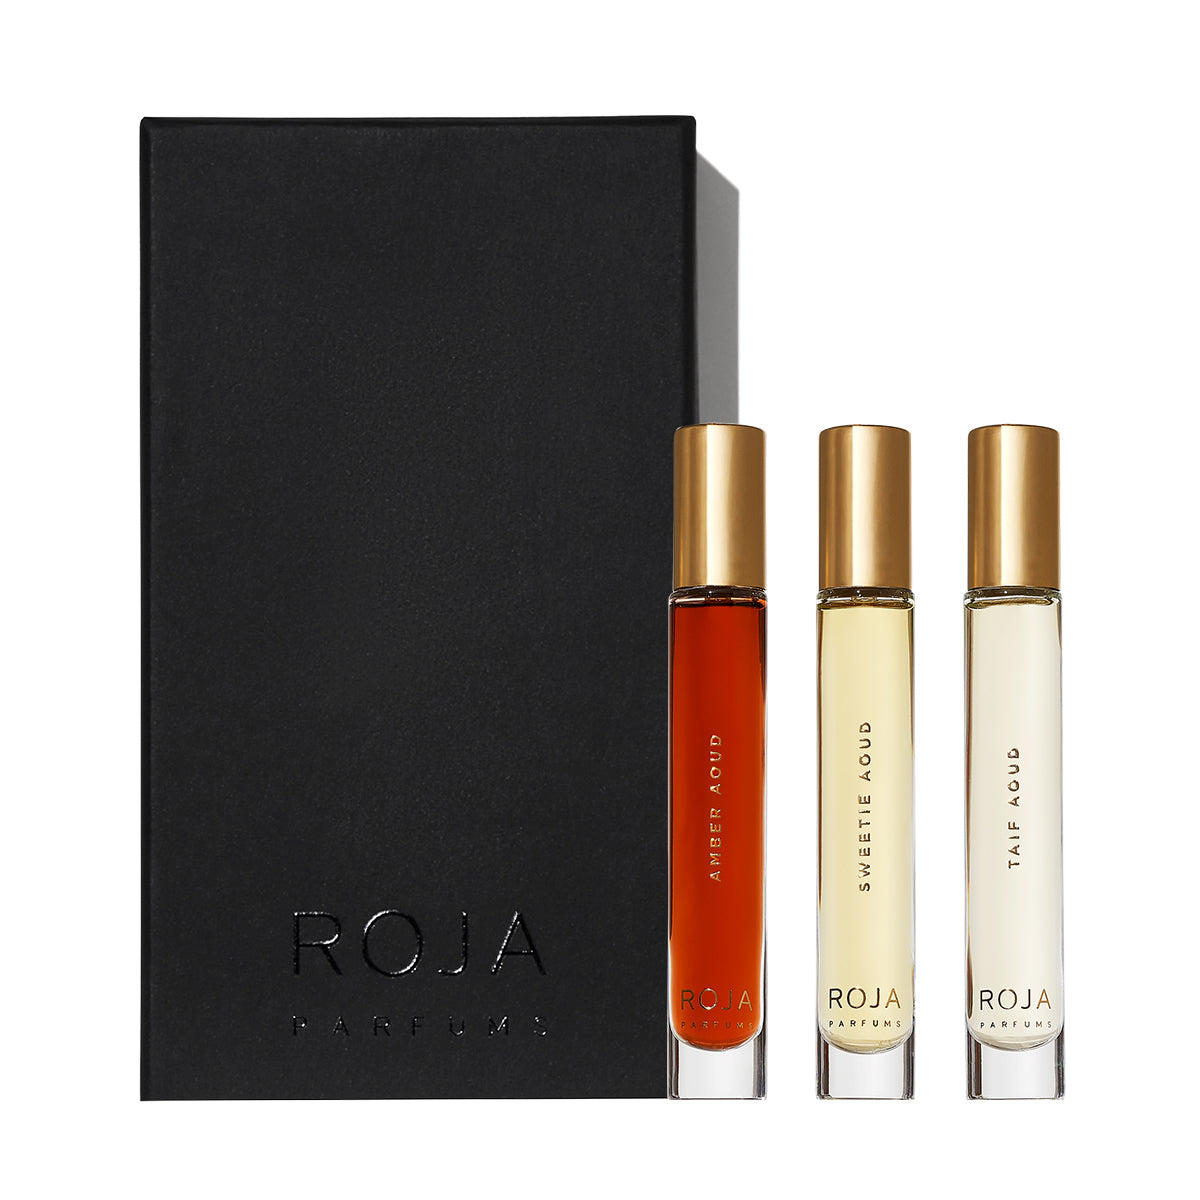 The Aoud Collection - Roja Parfums - 3x10 ml